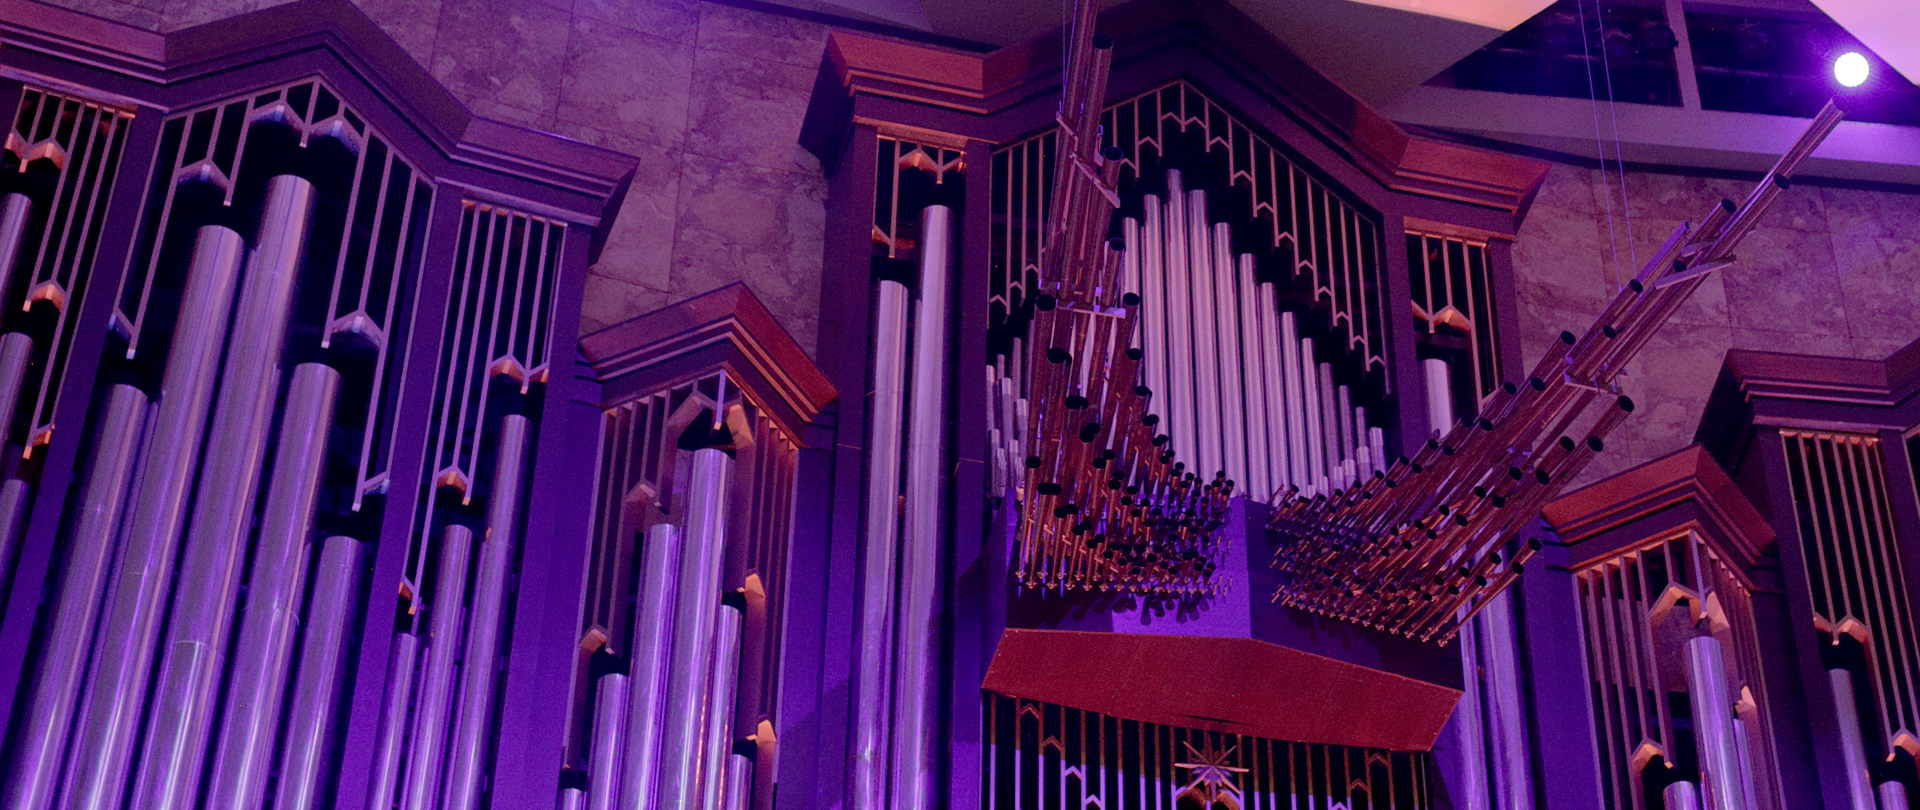 Organ Concert
Thursday, April 25
